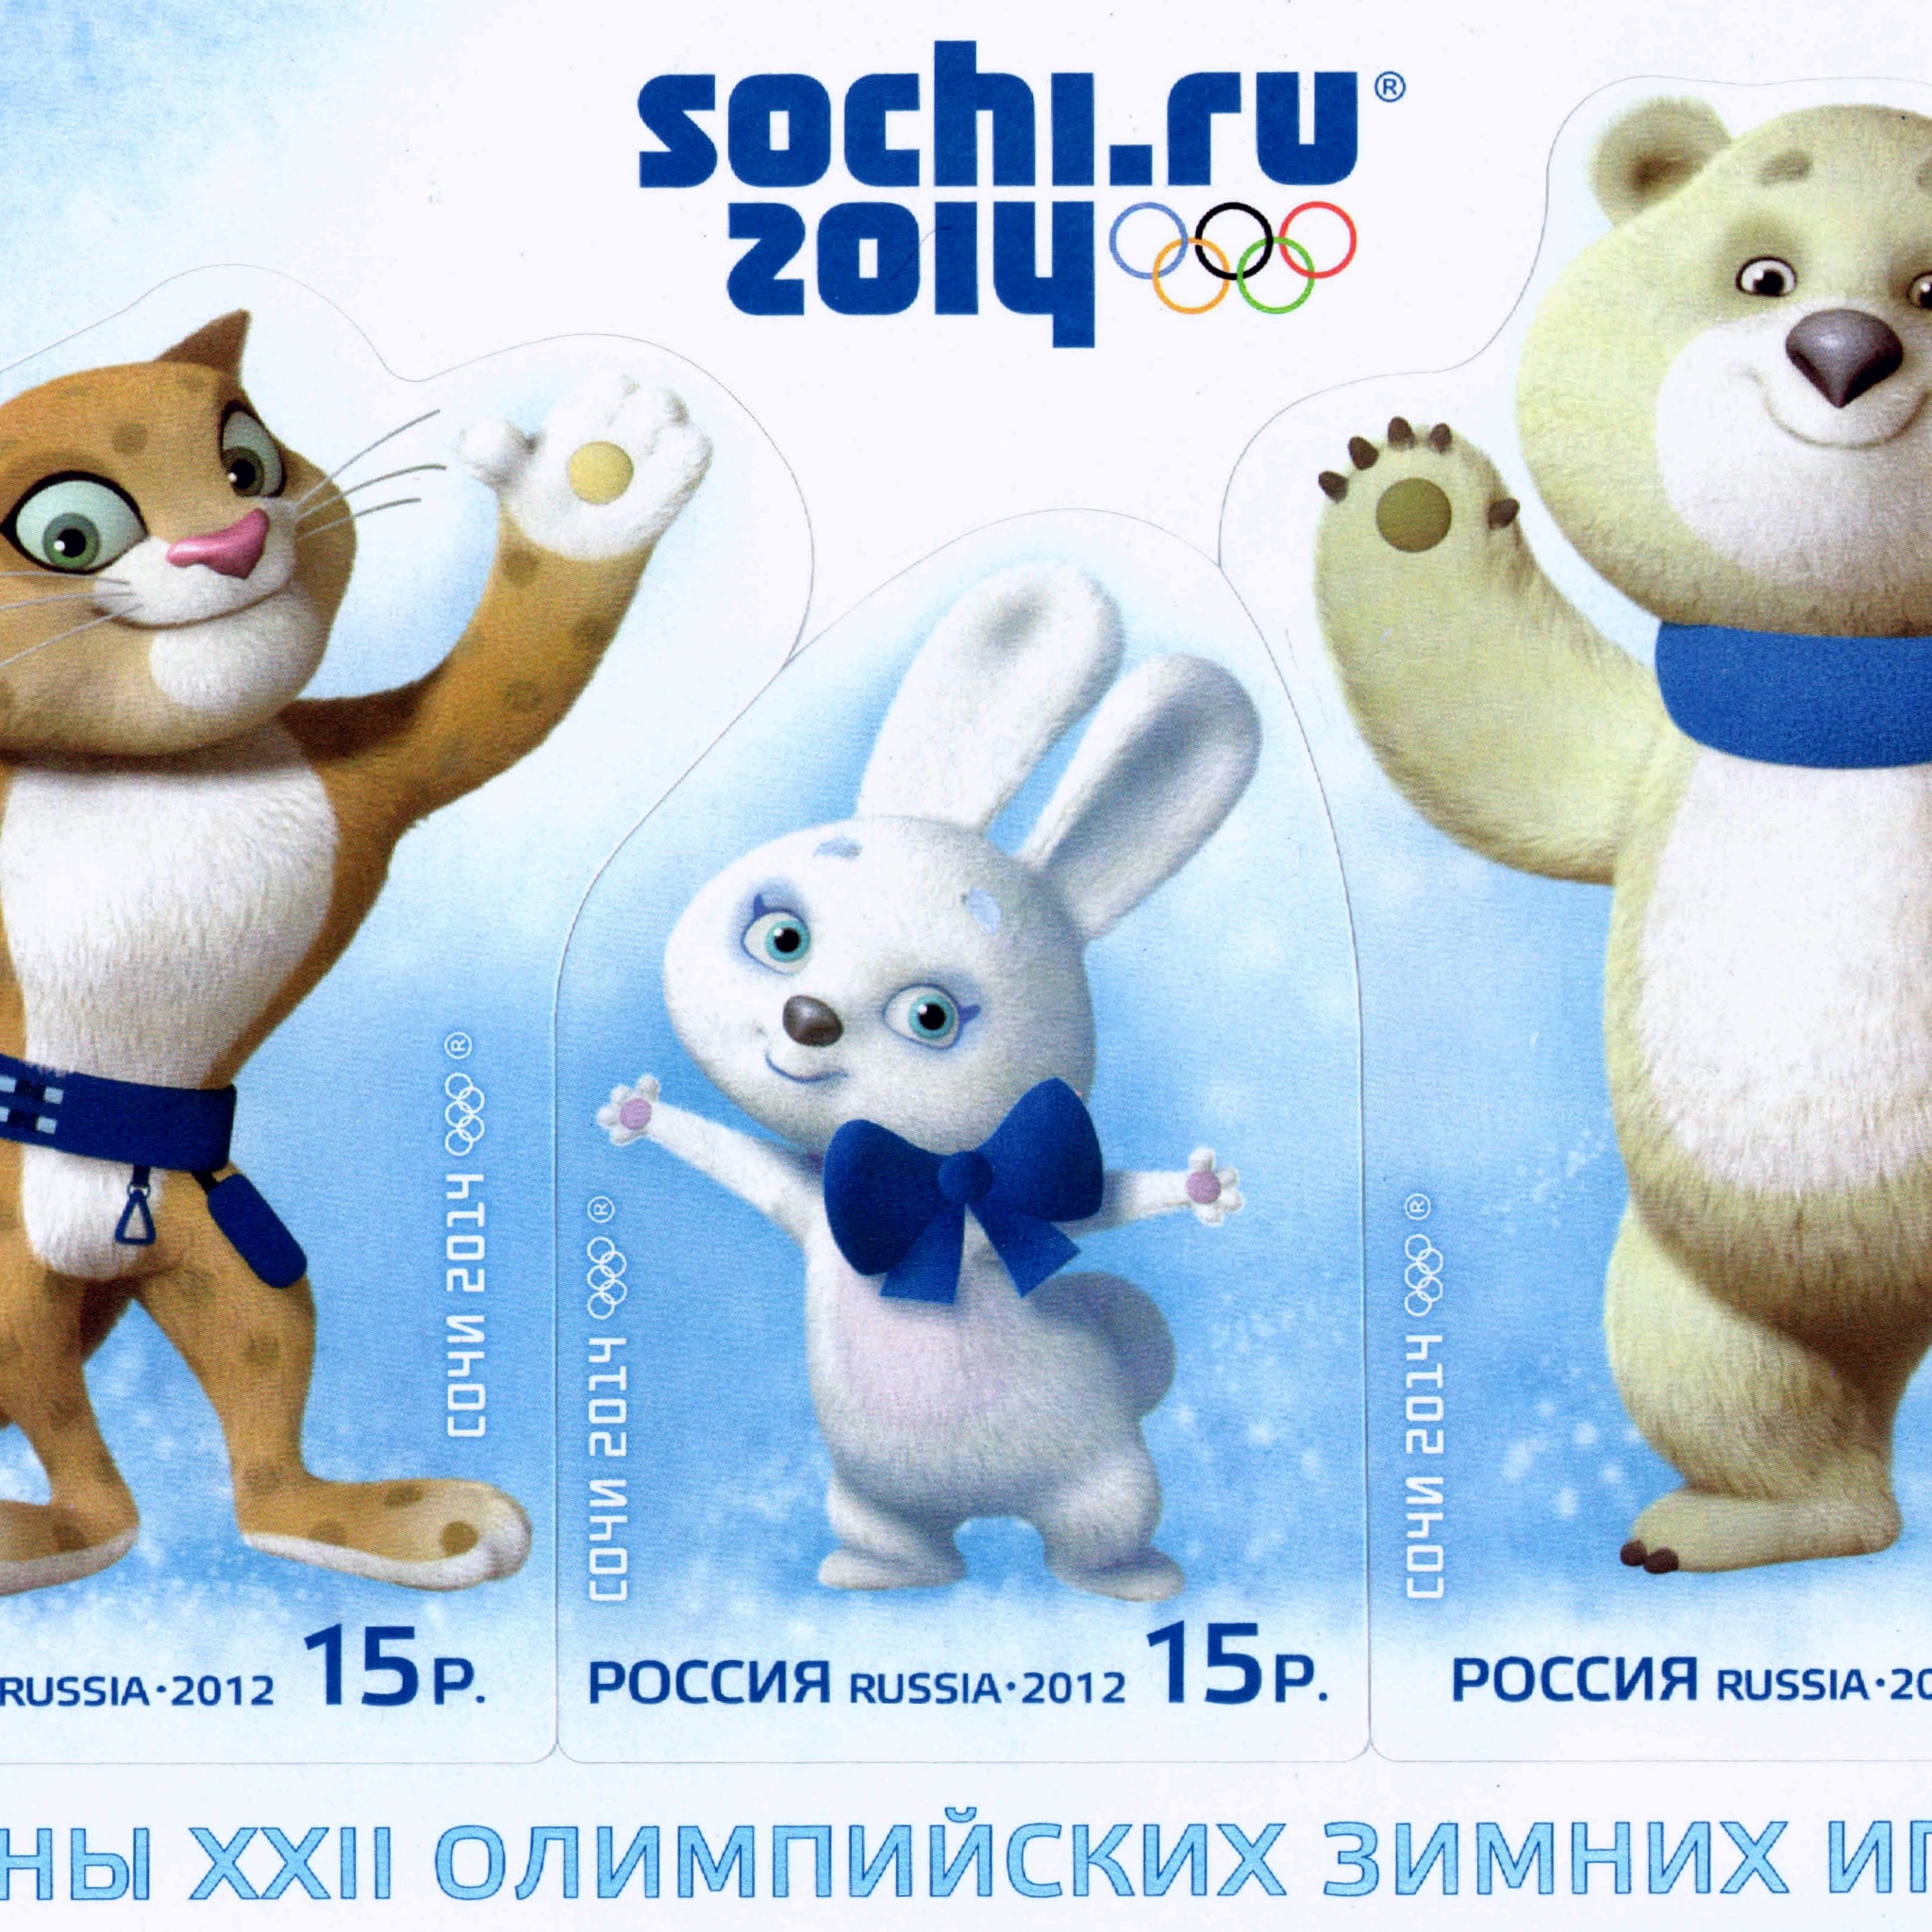 Mascots Winter Olympics Sochi 2014